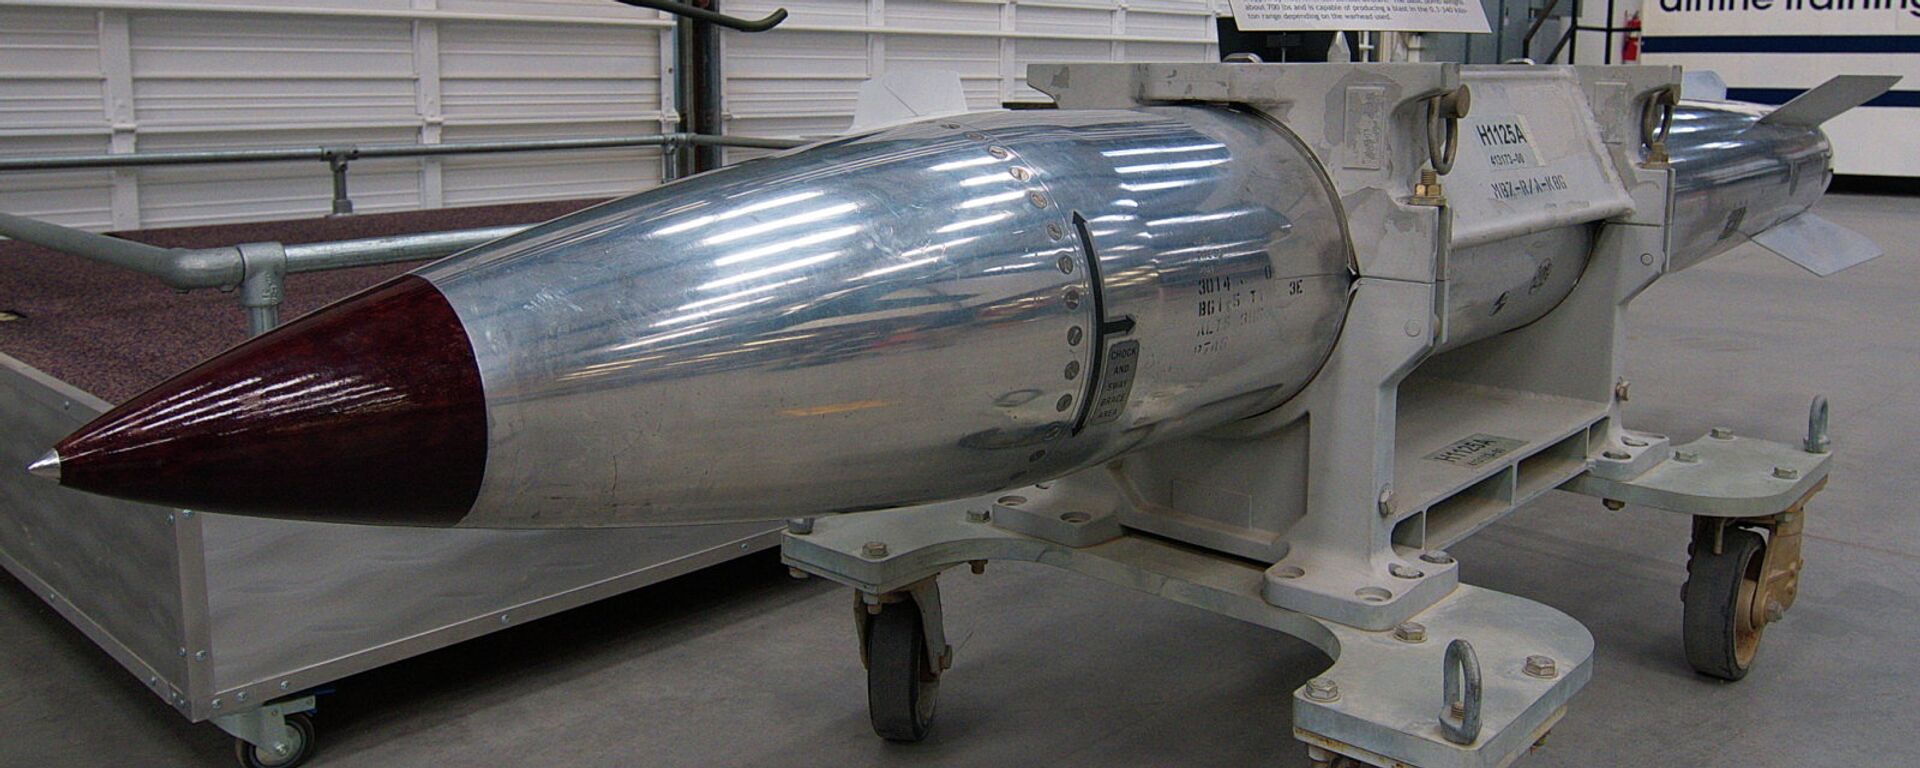 Bomba nuclear B61 - Sputnik Brasil, 1920, 23.07.2022